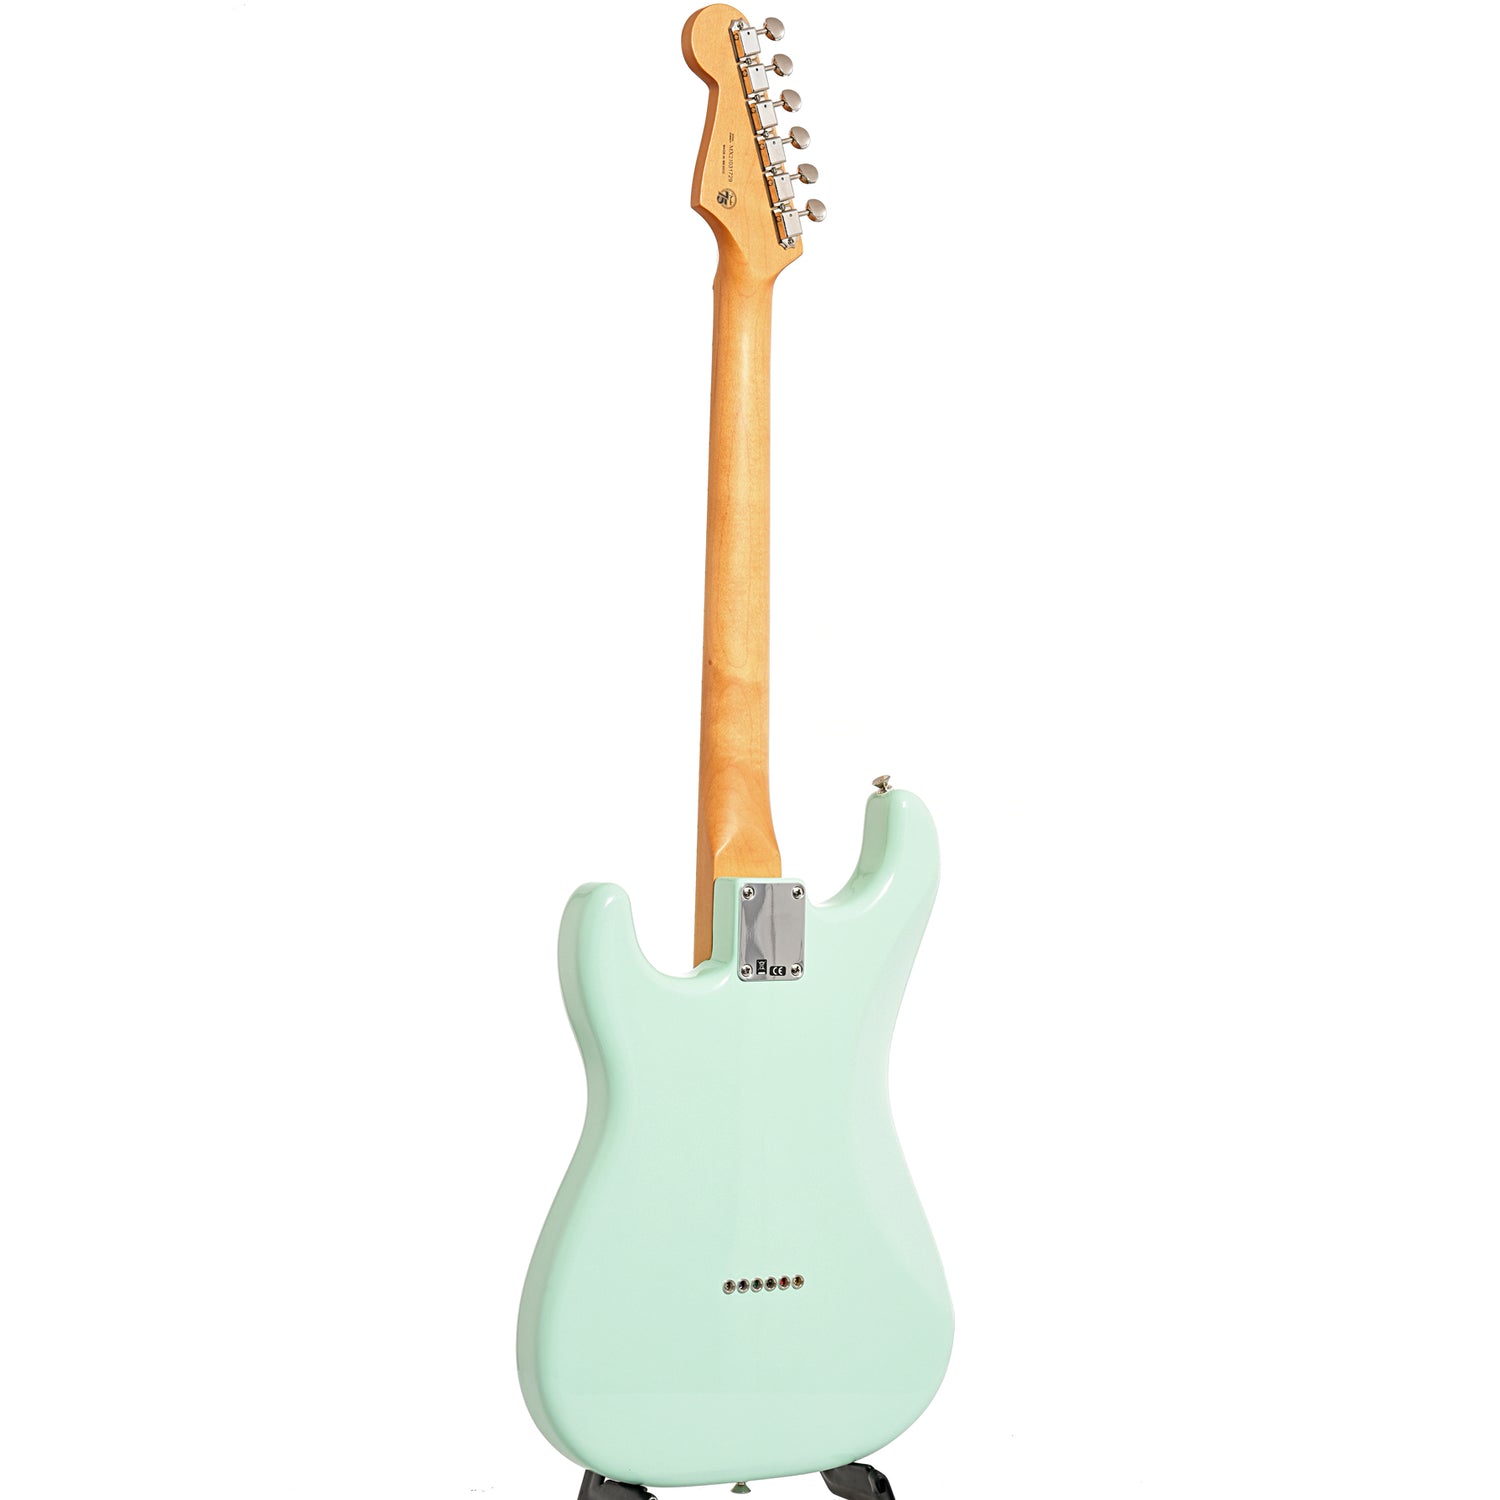 Full back and side of Fender Stratocaster Noventa 